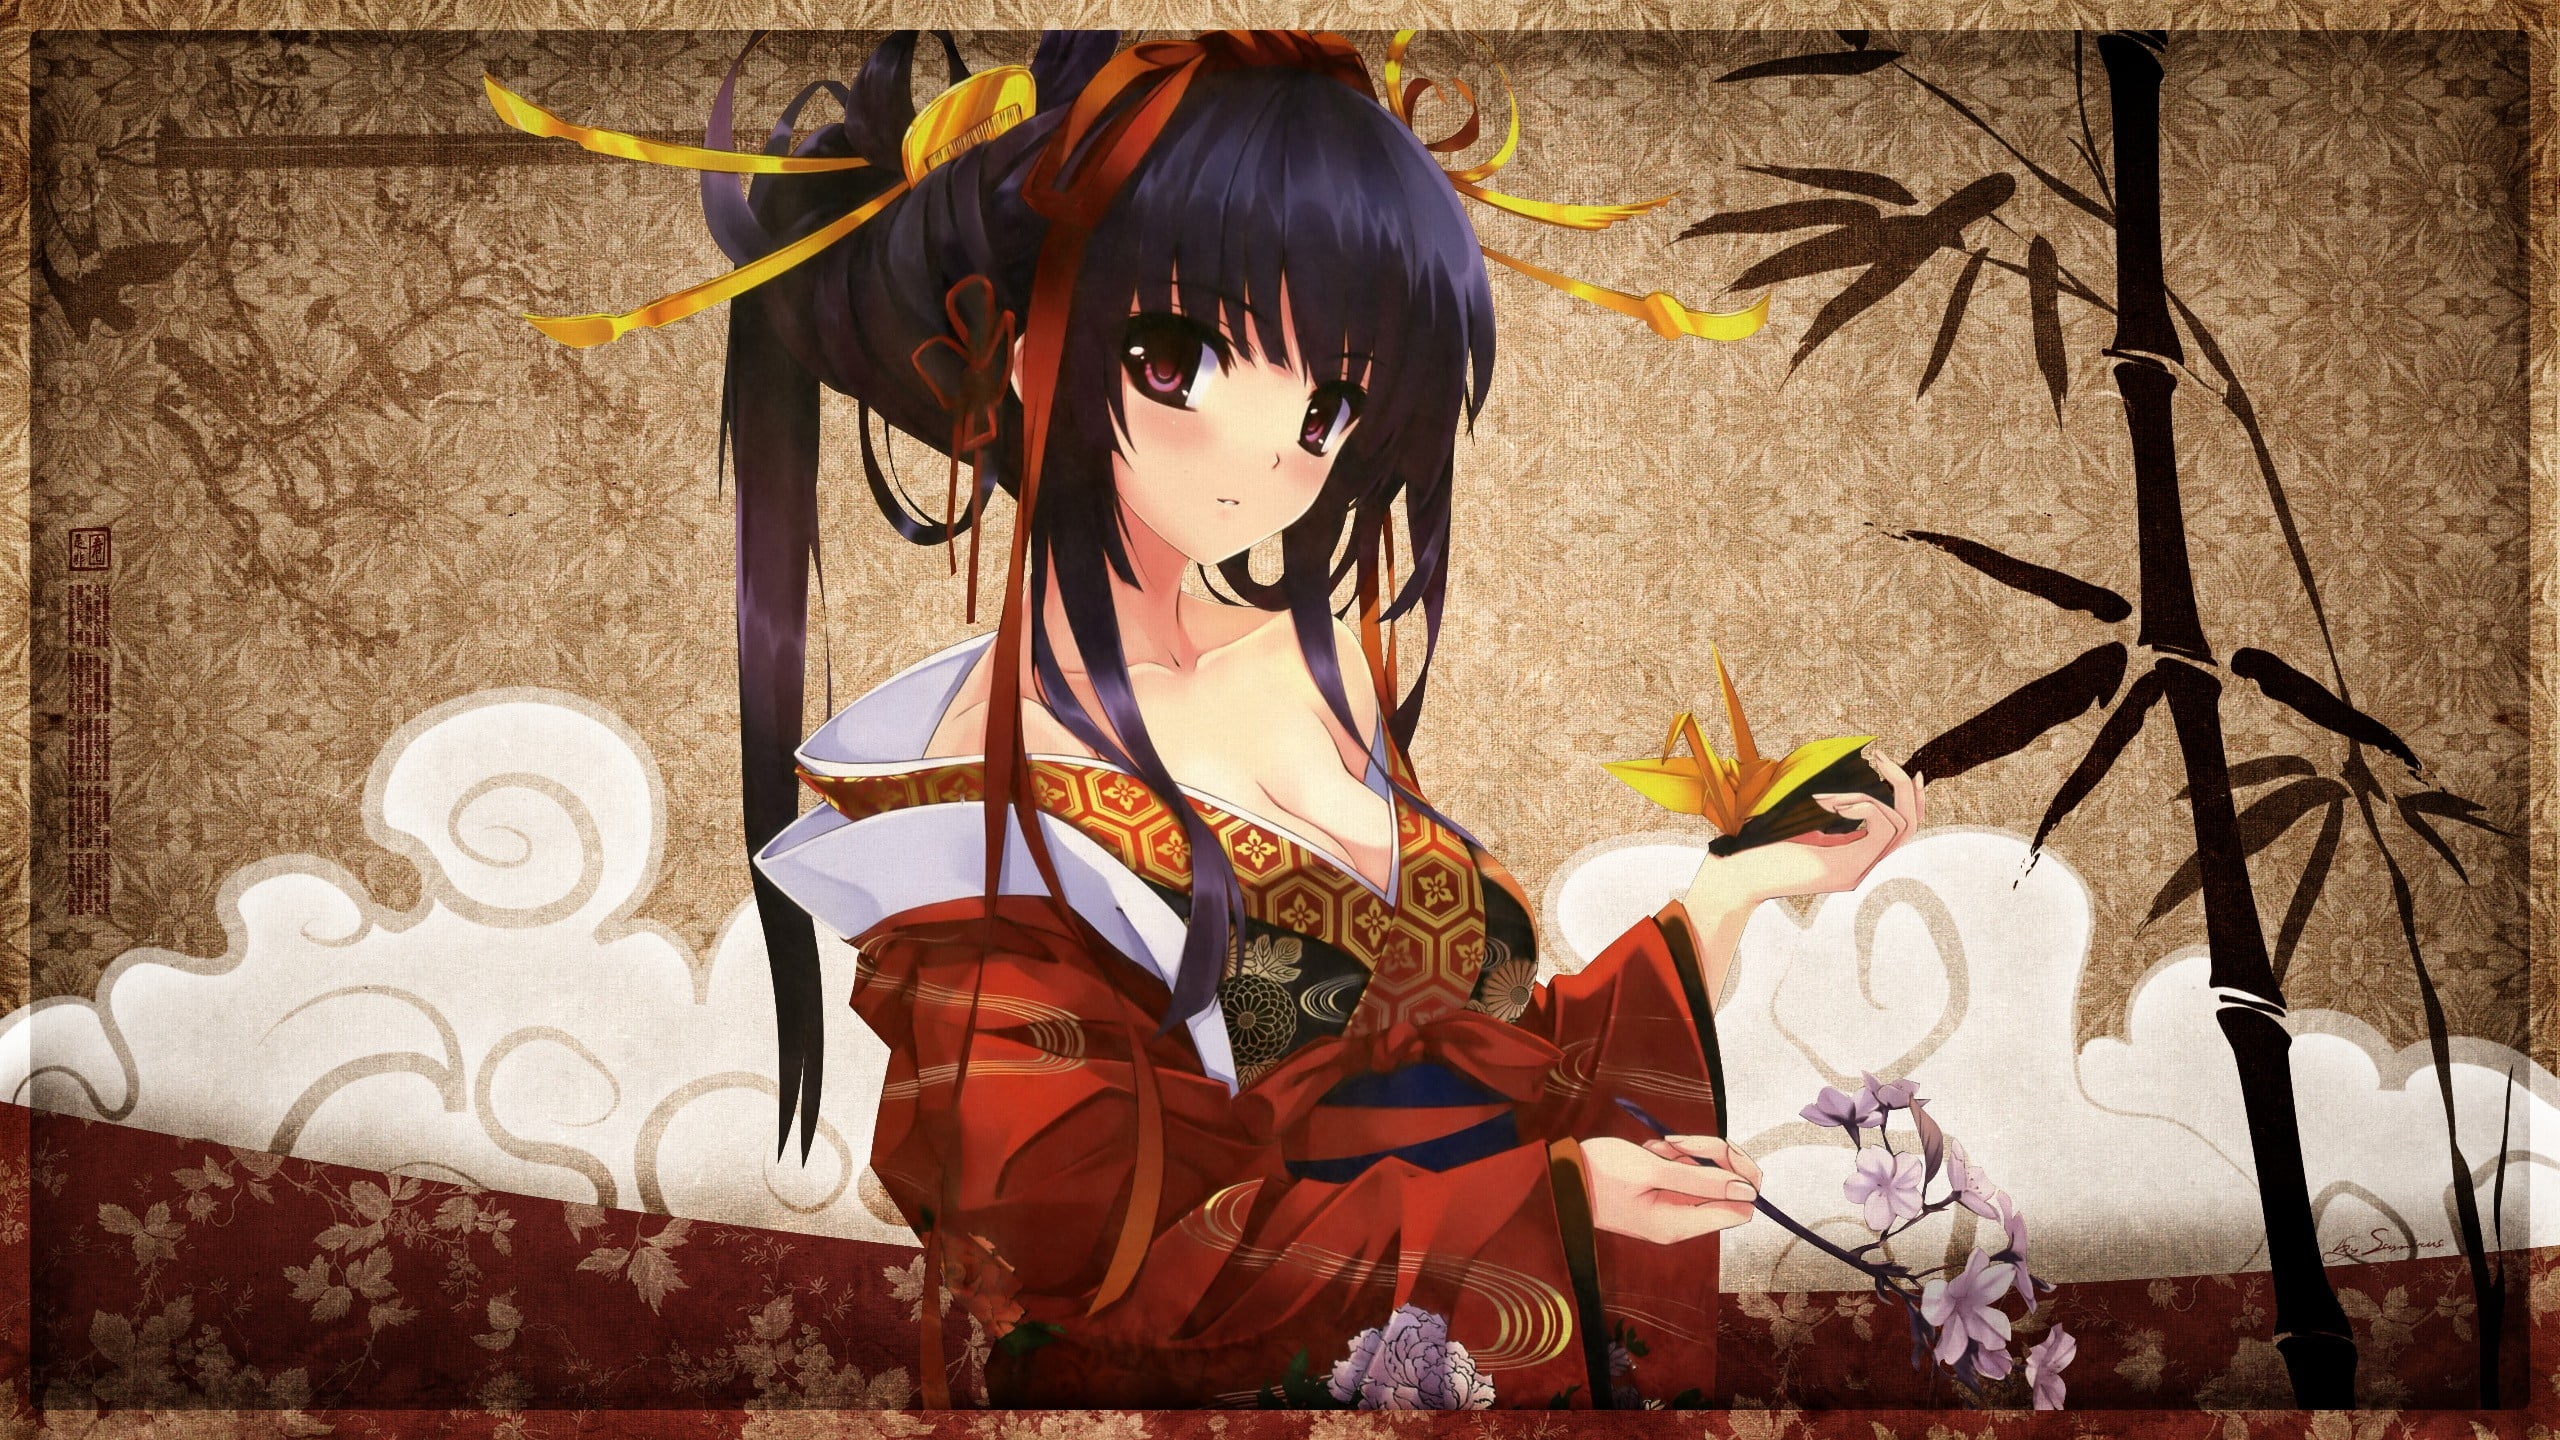 anime girl character with purple hair wearing red kimono and holding Sakura flower illustration